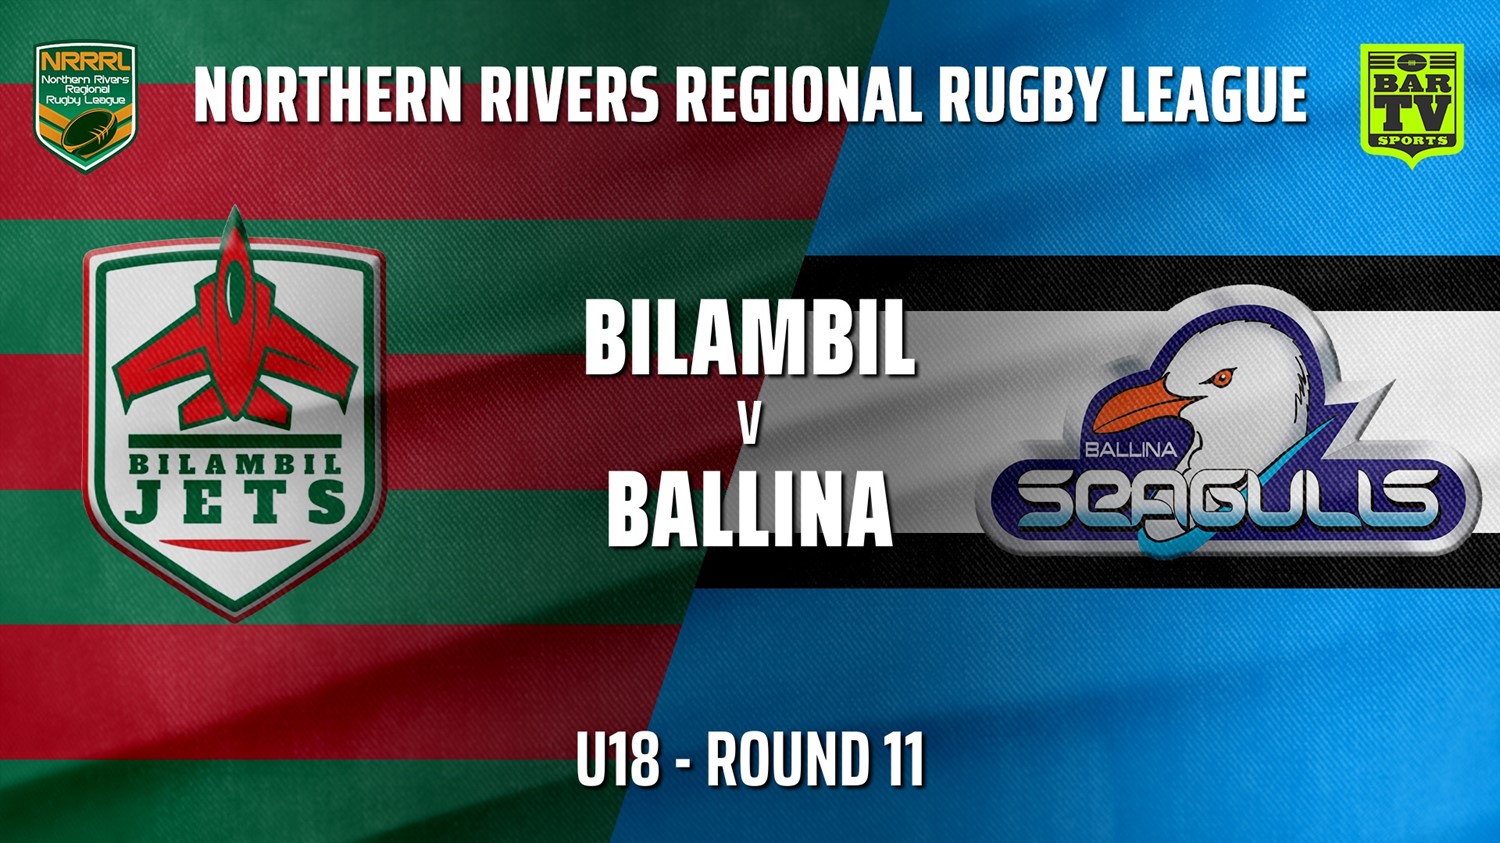 210718-Northern Rivers Round 11 - U18 - Bilambil Jets v Ballina Seagulls Slate Image